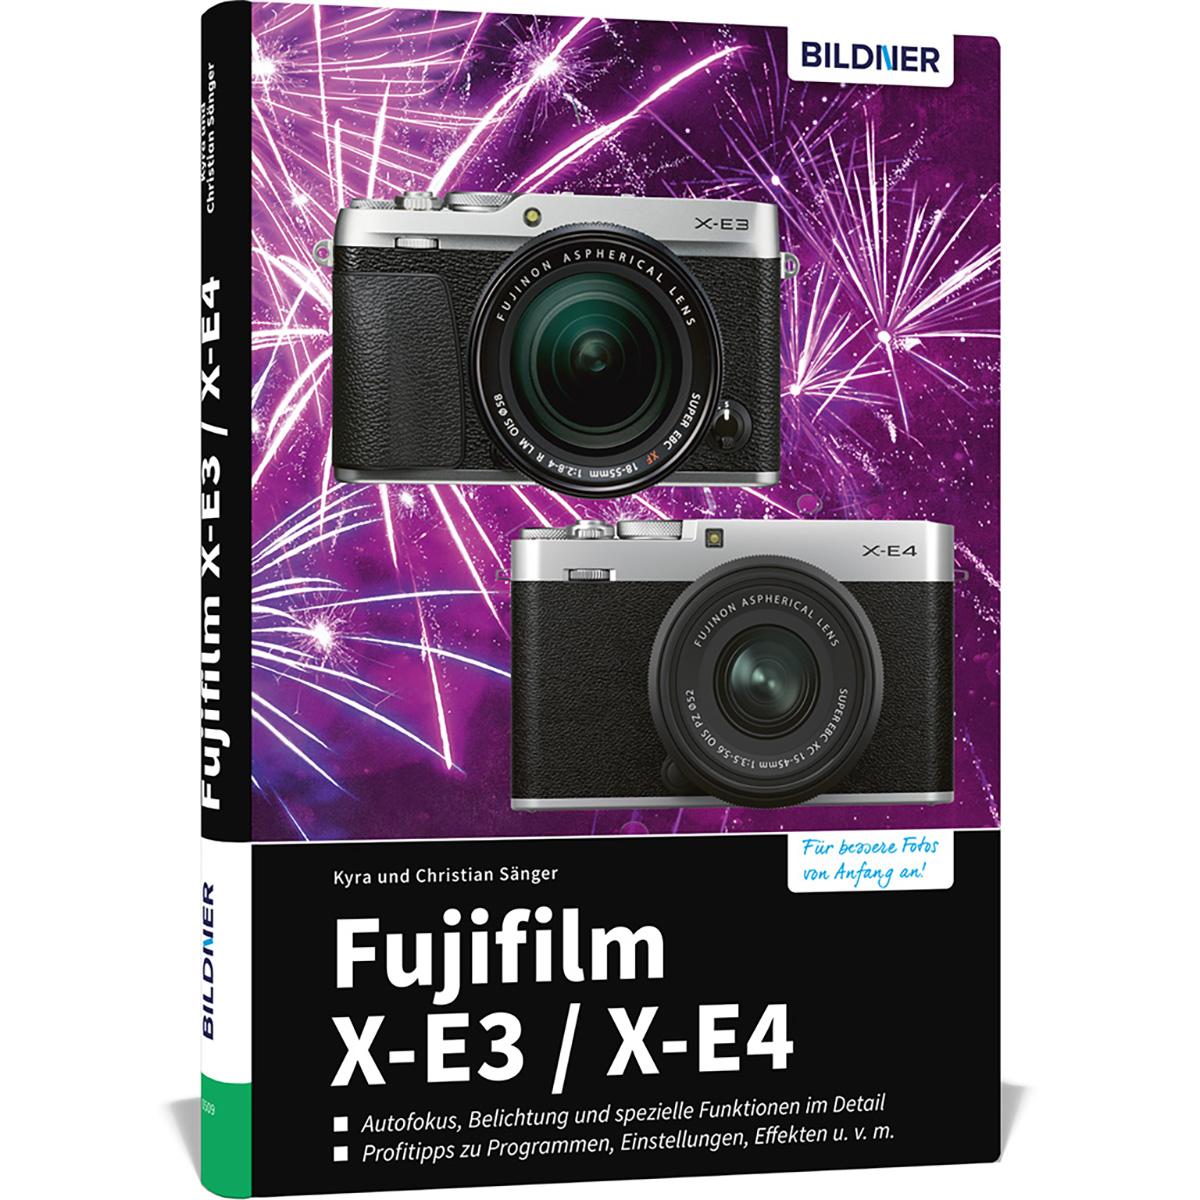 zu - Kamera! / Praxisbuch umfangreiche Ihrer Fujifilm Das X-E3 X-E4